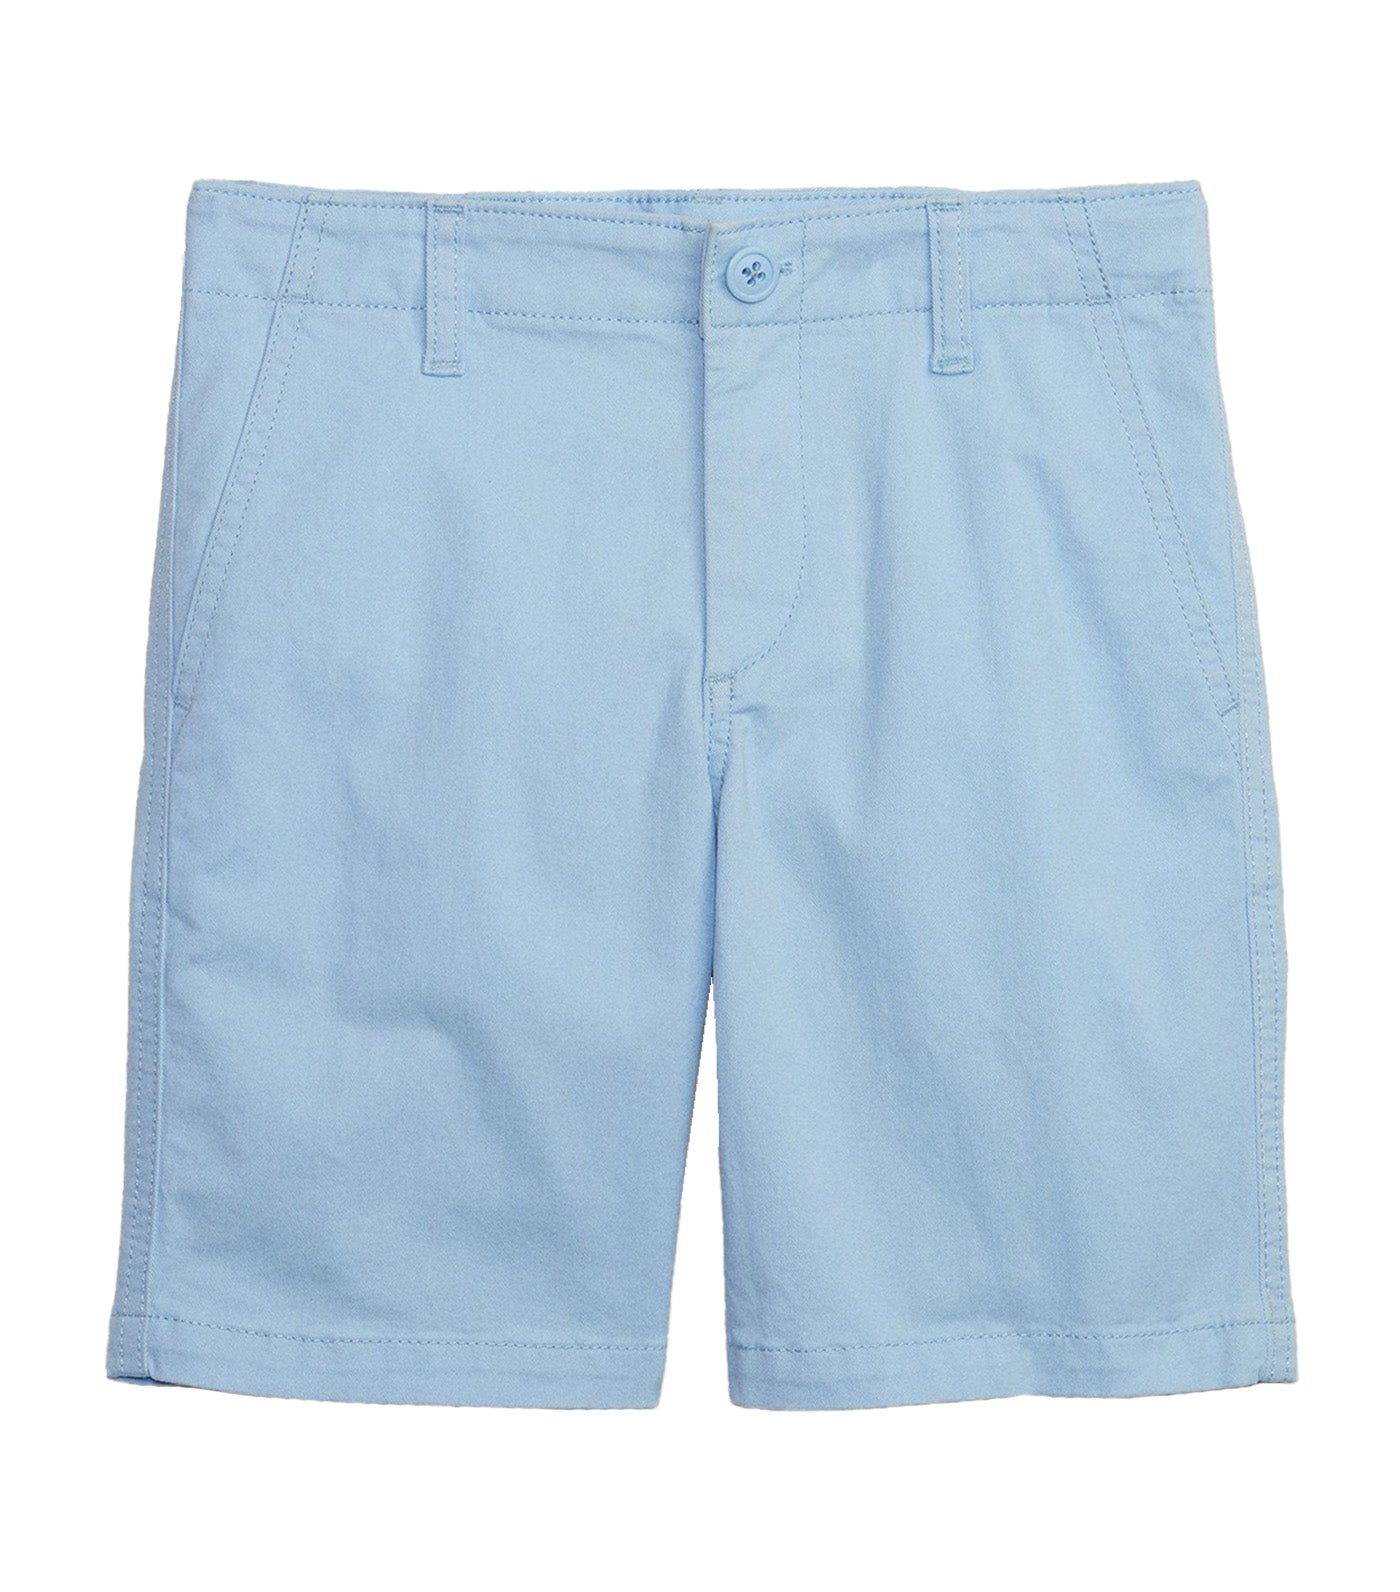 Khaki Shorts with Washwell - Cerulean Blue 402